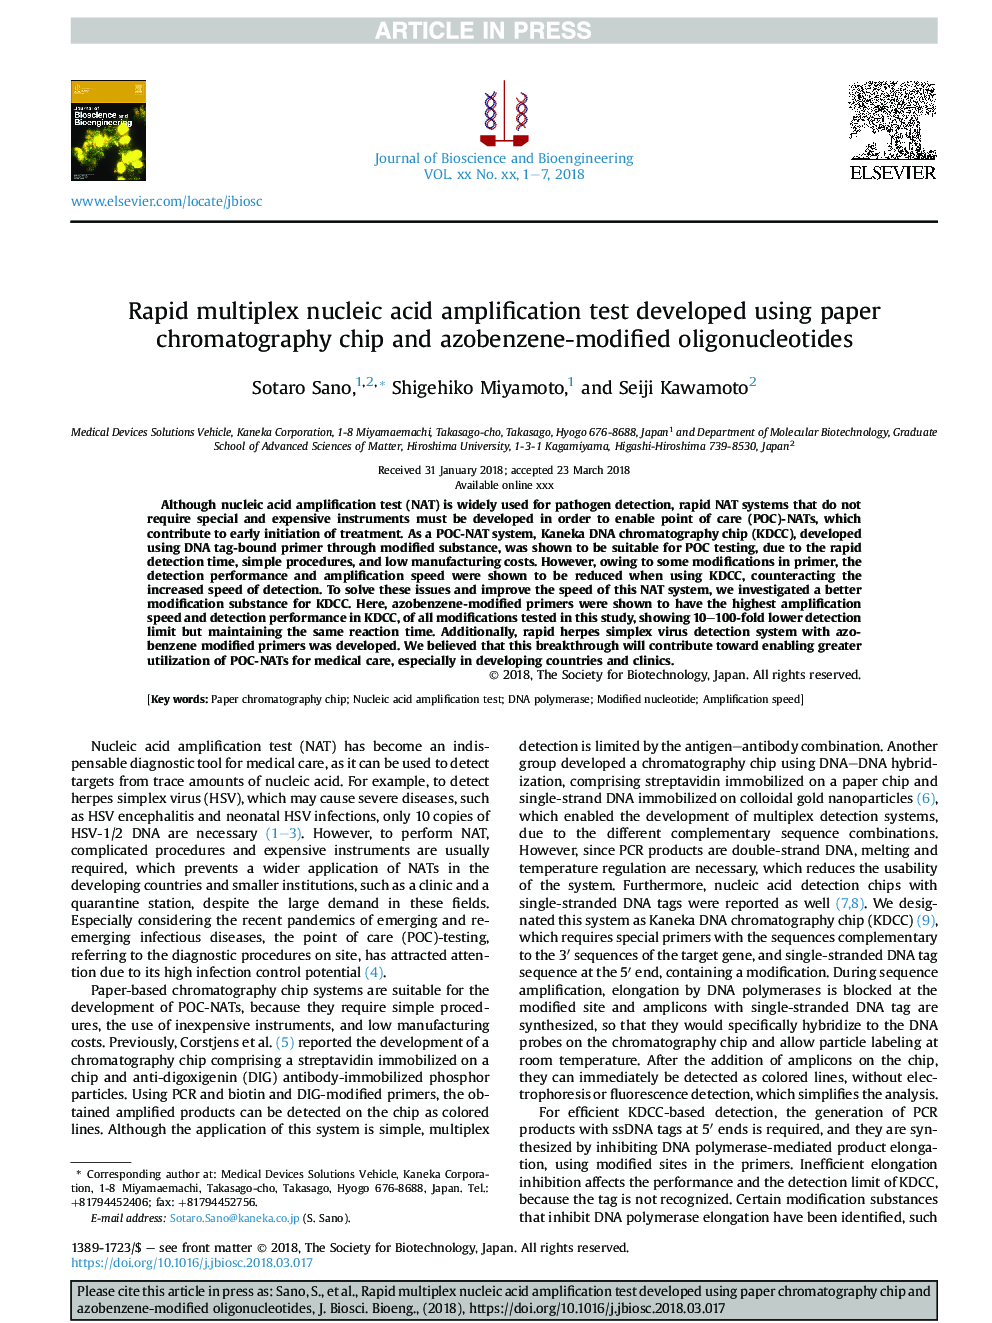 Rapid multiplex nucleic acid amplification test developed using paper chromatography chip and azobenzene-modified oligonucleotides